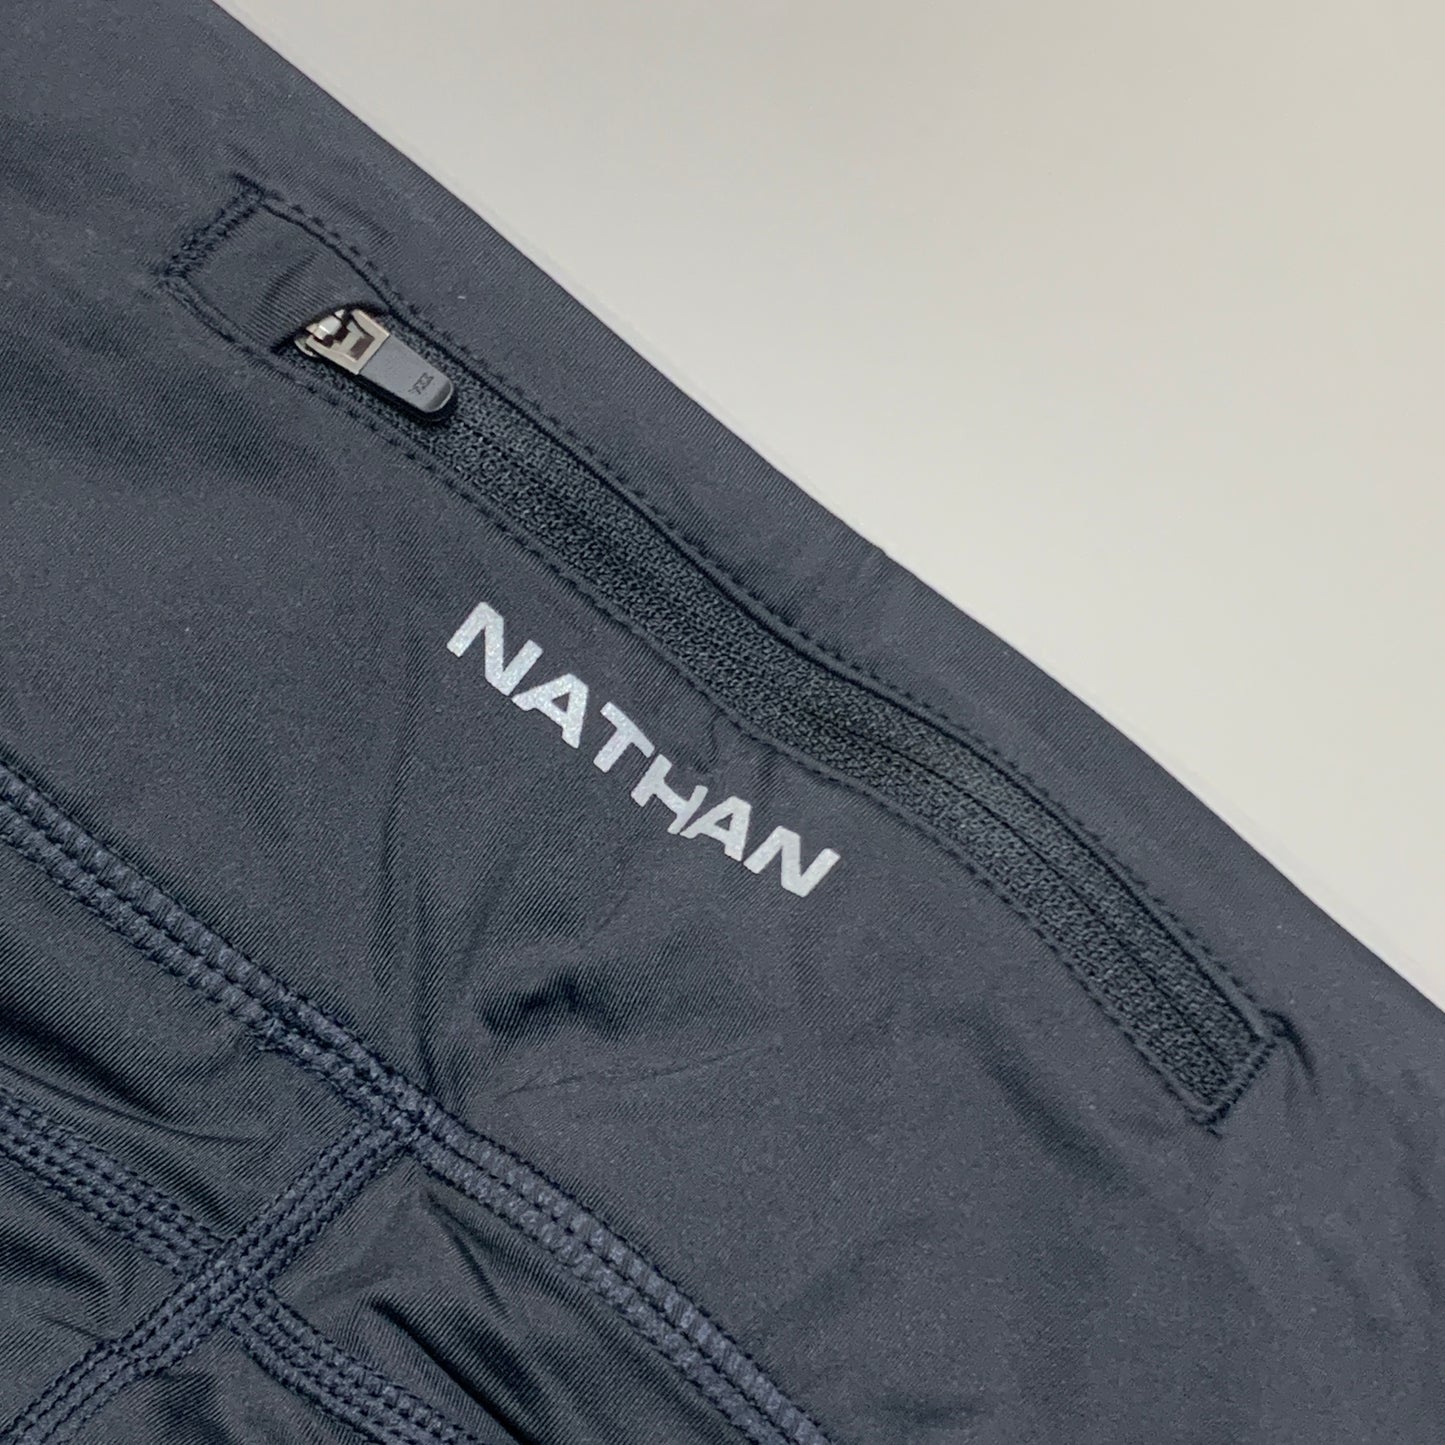 NATHAN Interval 3" Inseam Bike Short Women's Black Size Large NS51040-00001-L